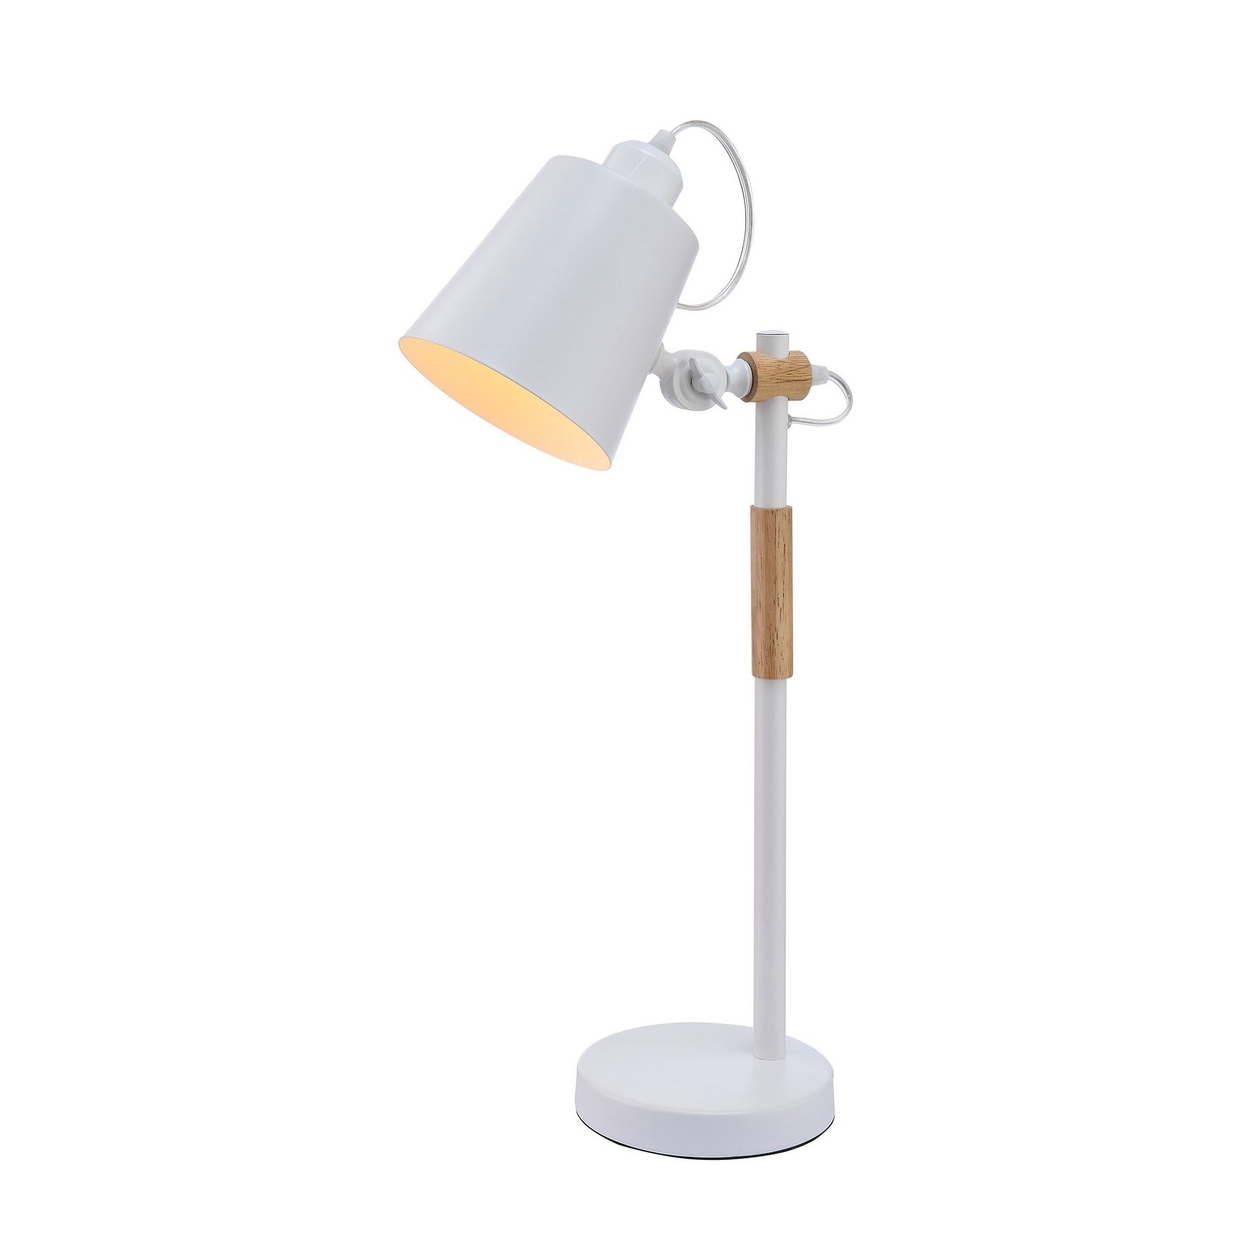 23 Inch Table Lamp, Brown Wood Trim, Dome Metal Shade White, Round Base -Saltoro Sherpi